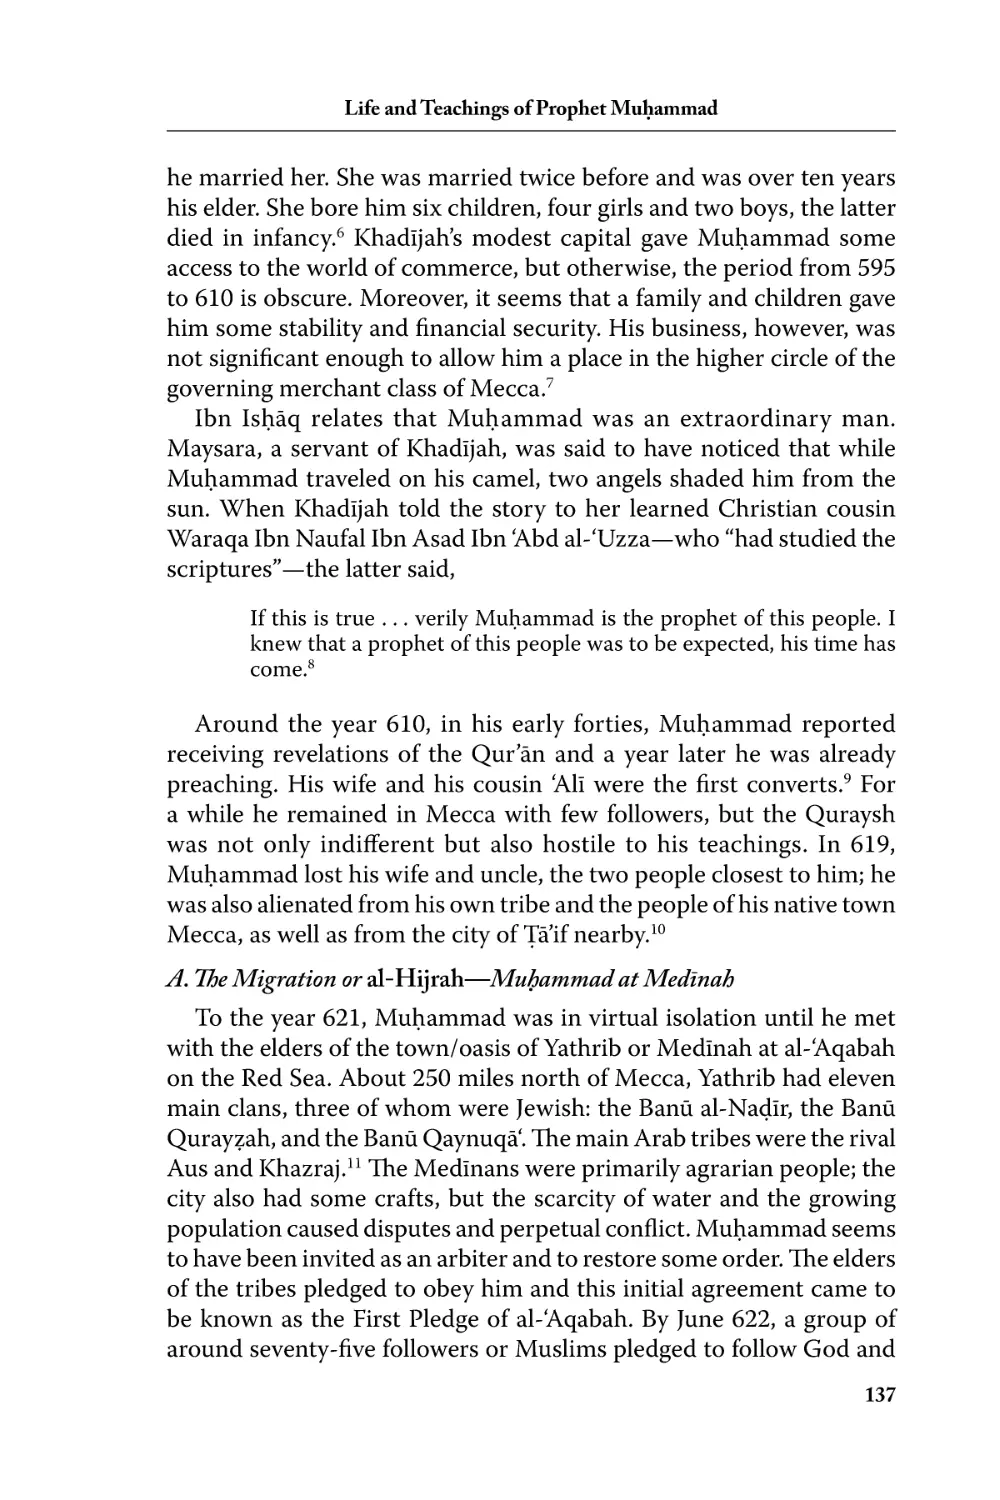 A. The Migration or al-Hijrah—Muhammad at Medīnah